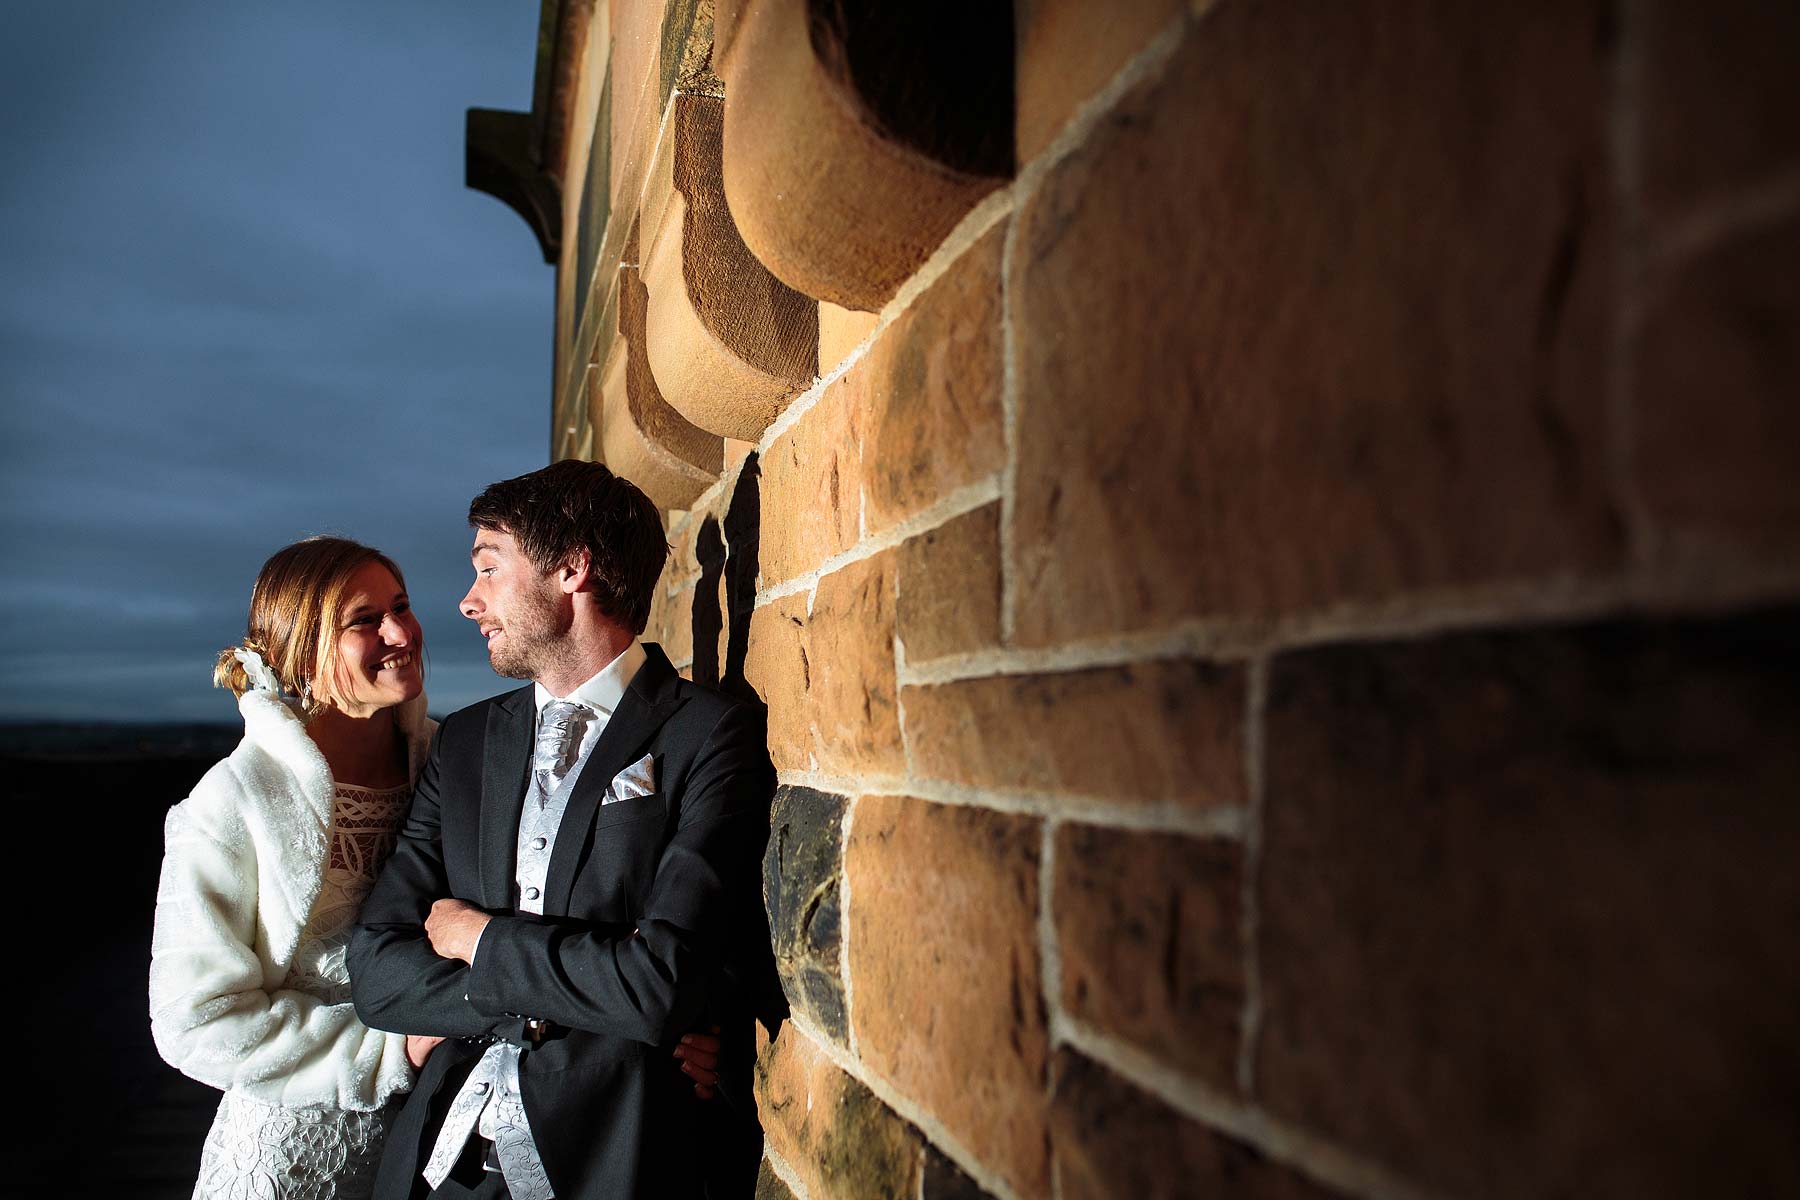 Creative wedding photography by Edinburgh CastleWedding Photographer Stuart James at Edinburgh Castle in Scotland